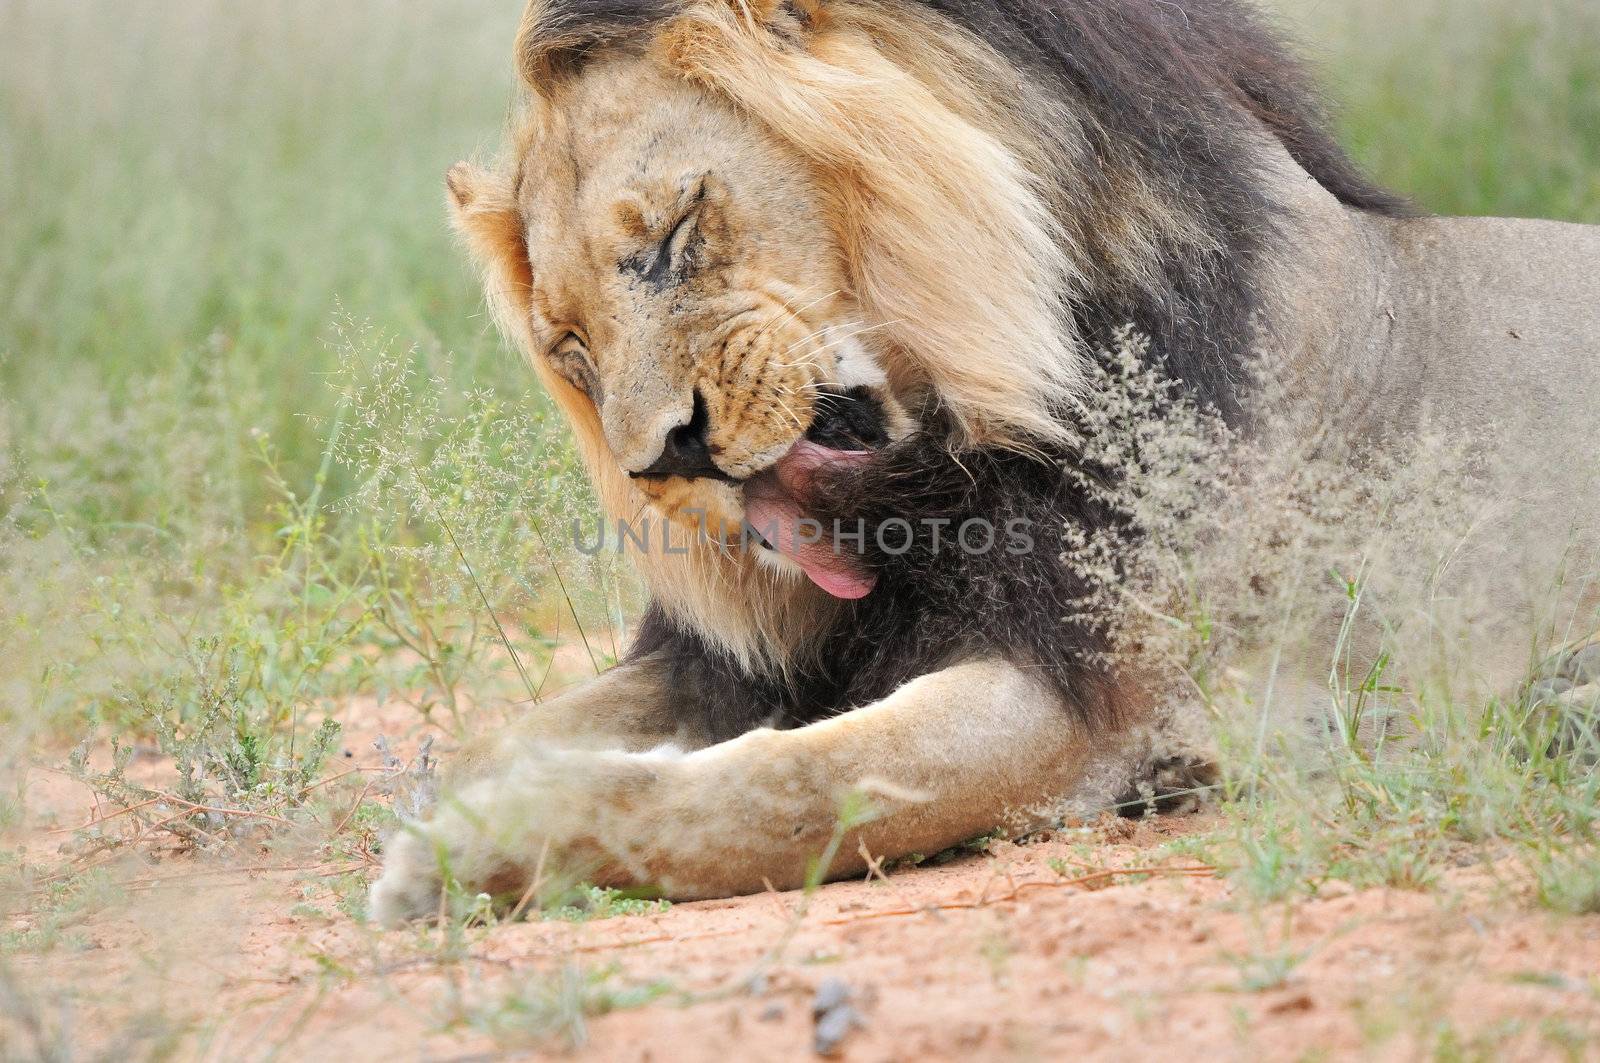 A male lion washing himself, Kgalagadi Transfrontier Park.